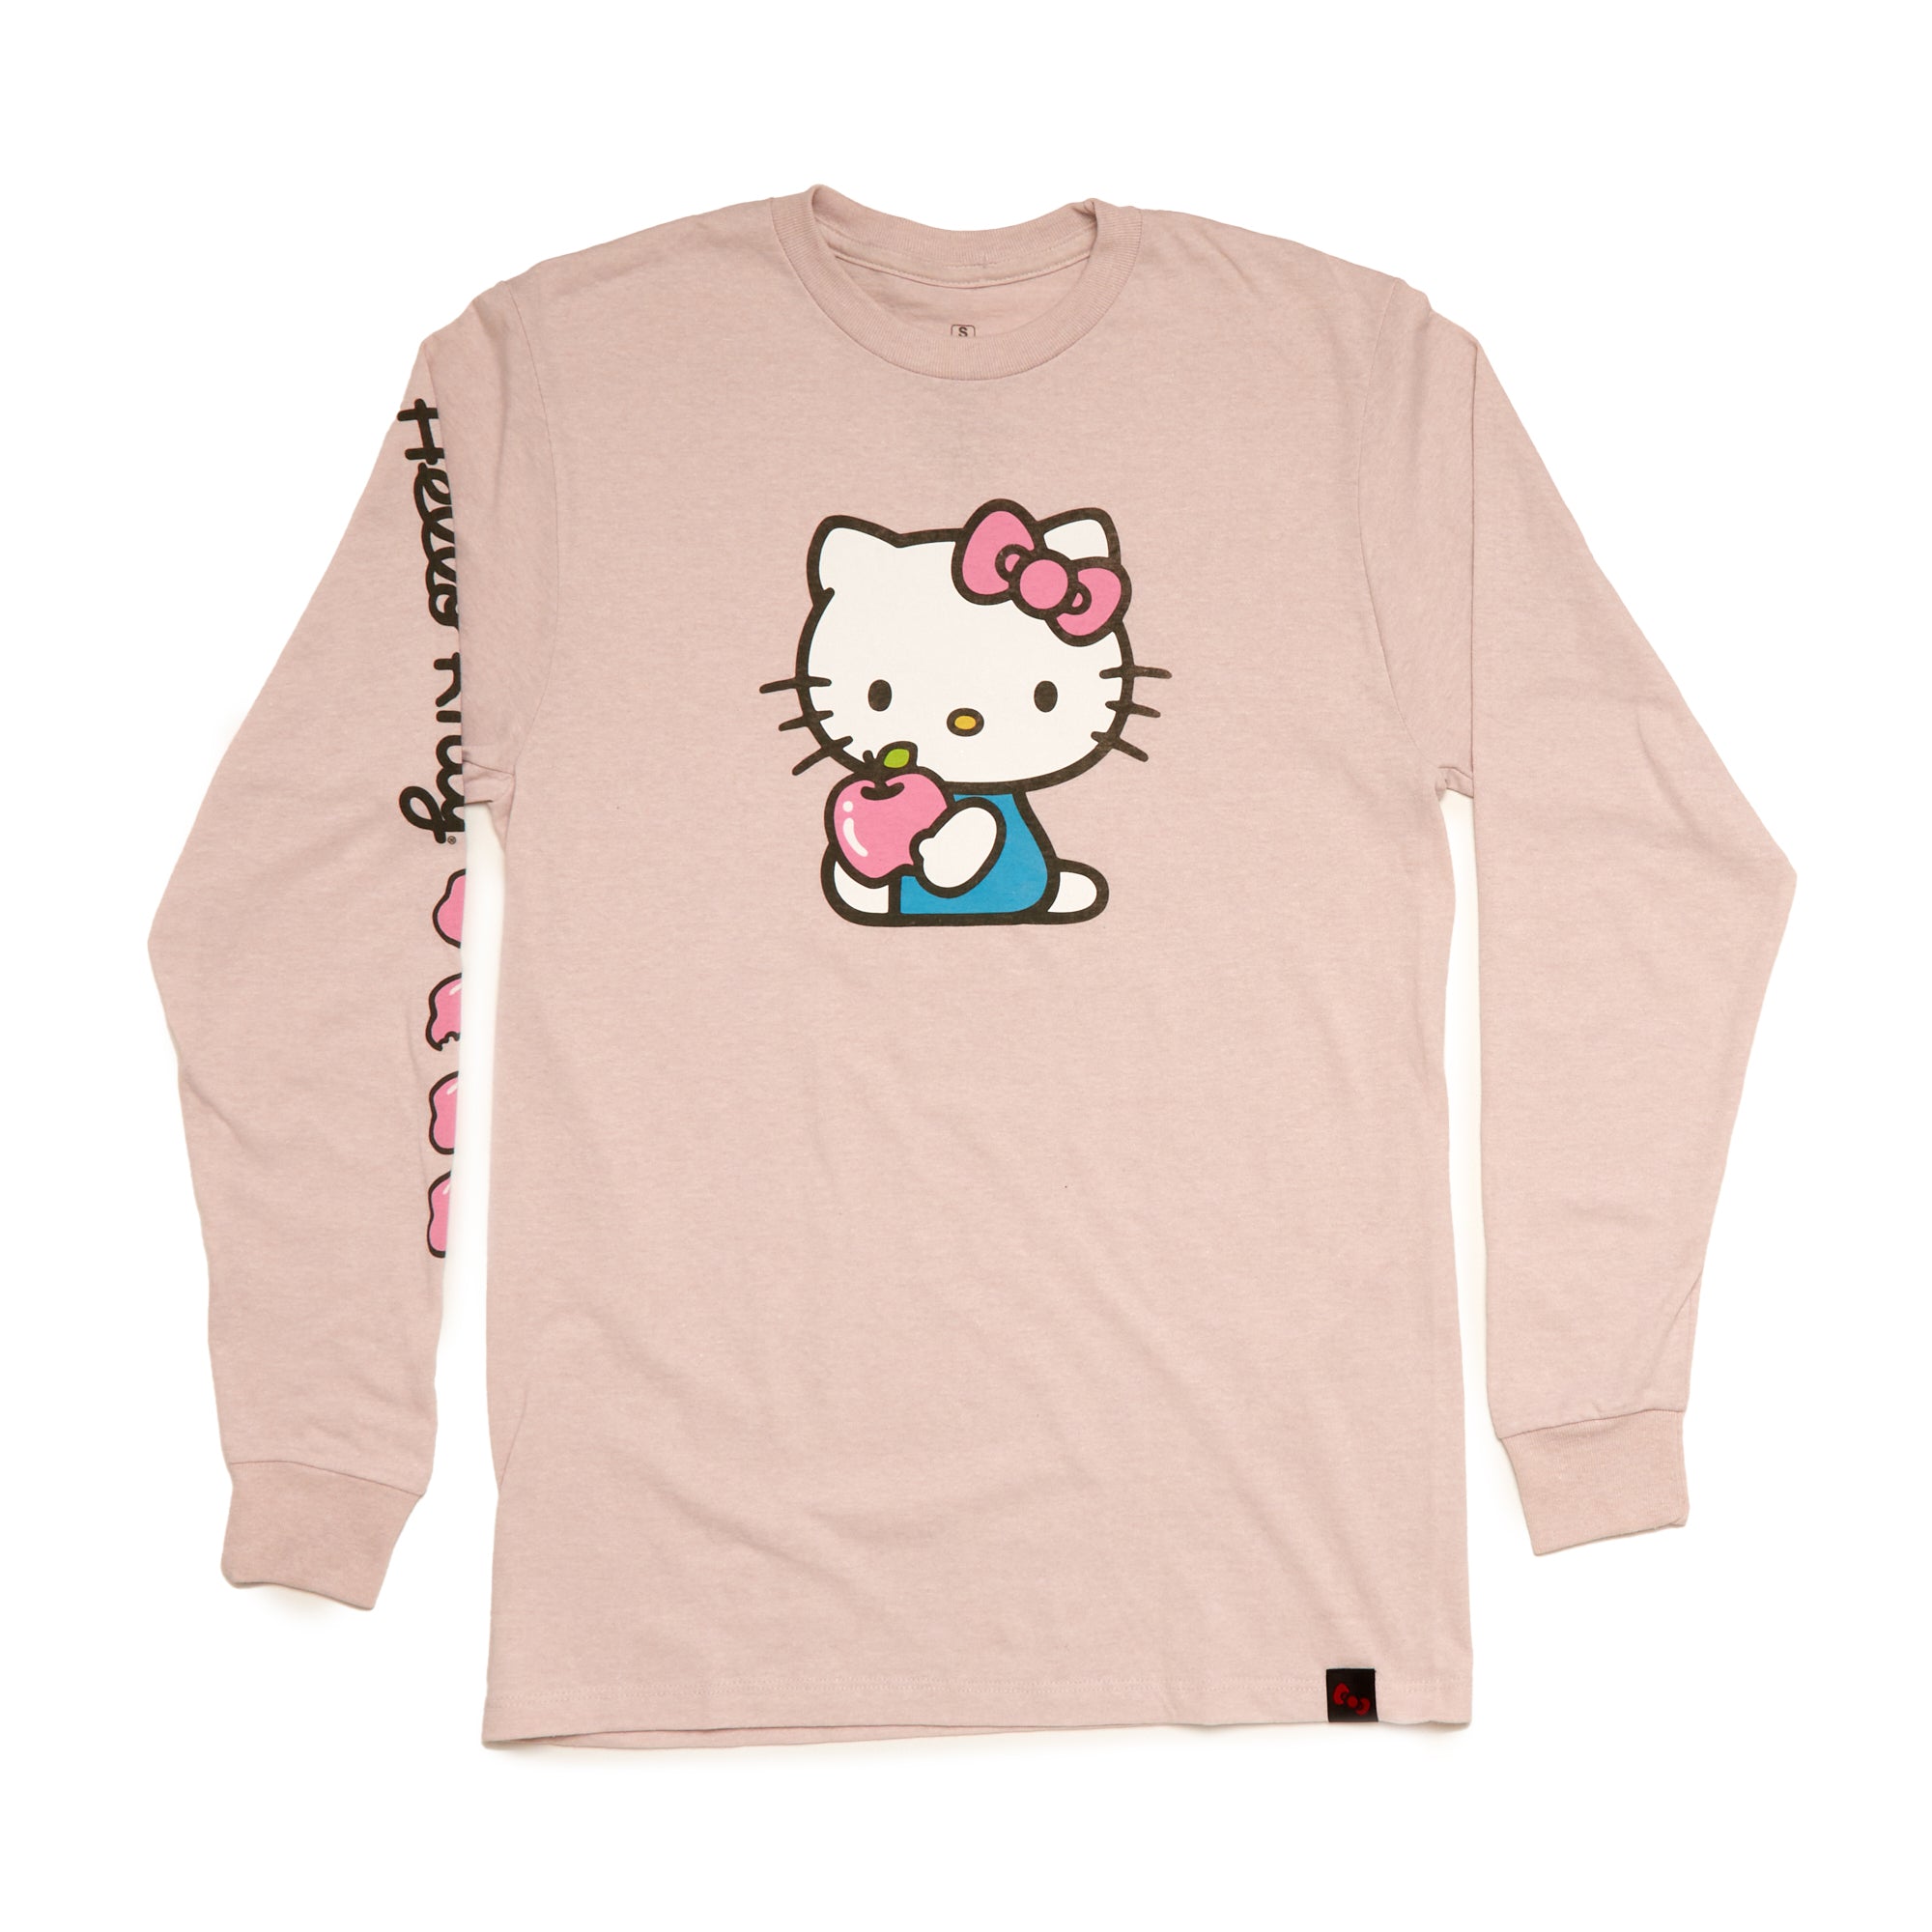 Sanrio - Hello Kitty Apples T-Shirt - Crunchyroll Exclusive!